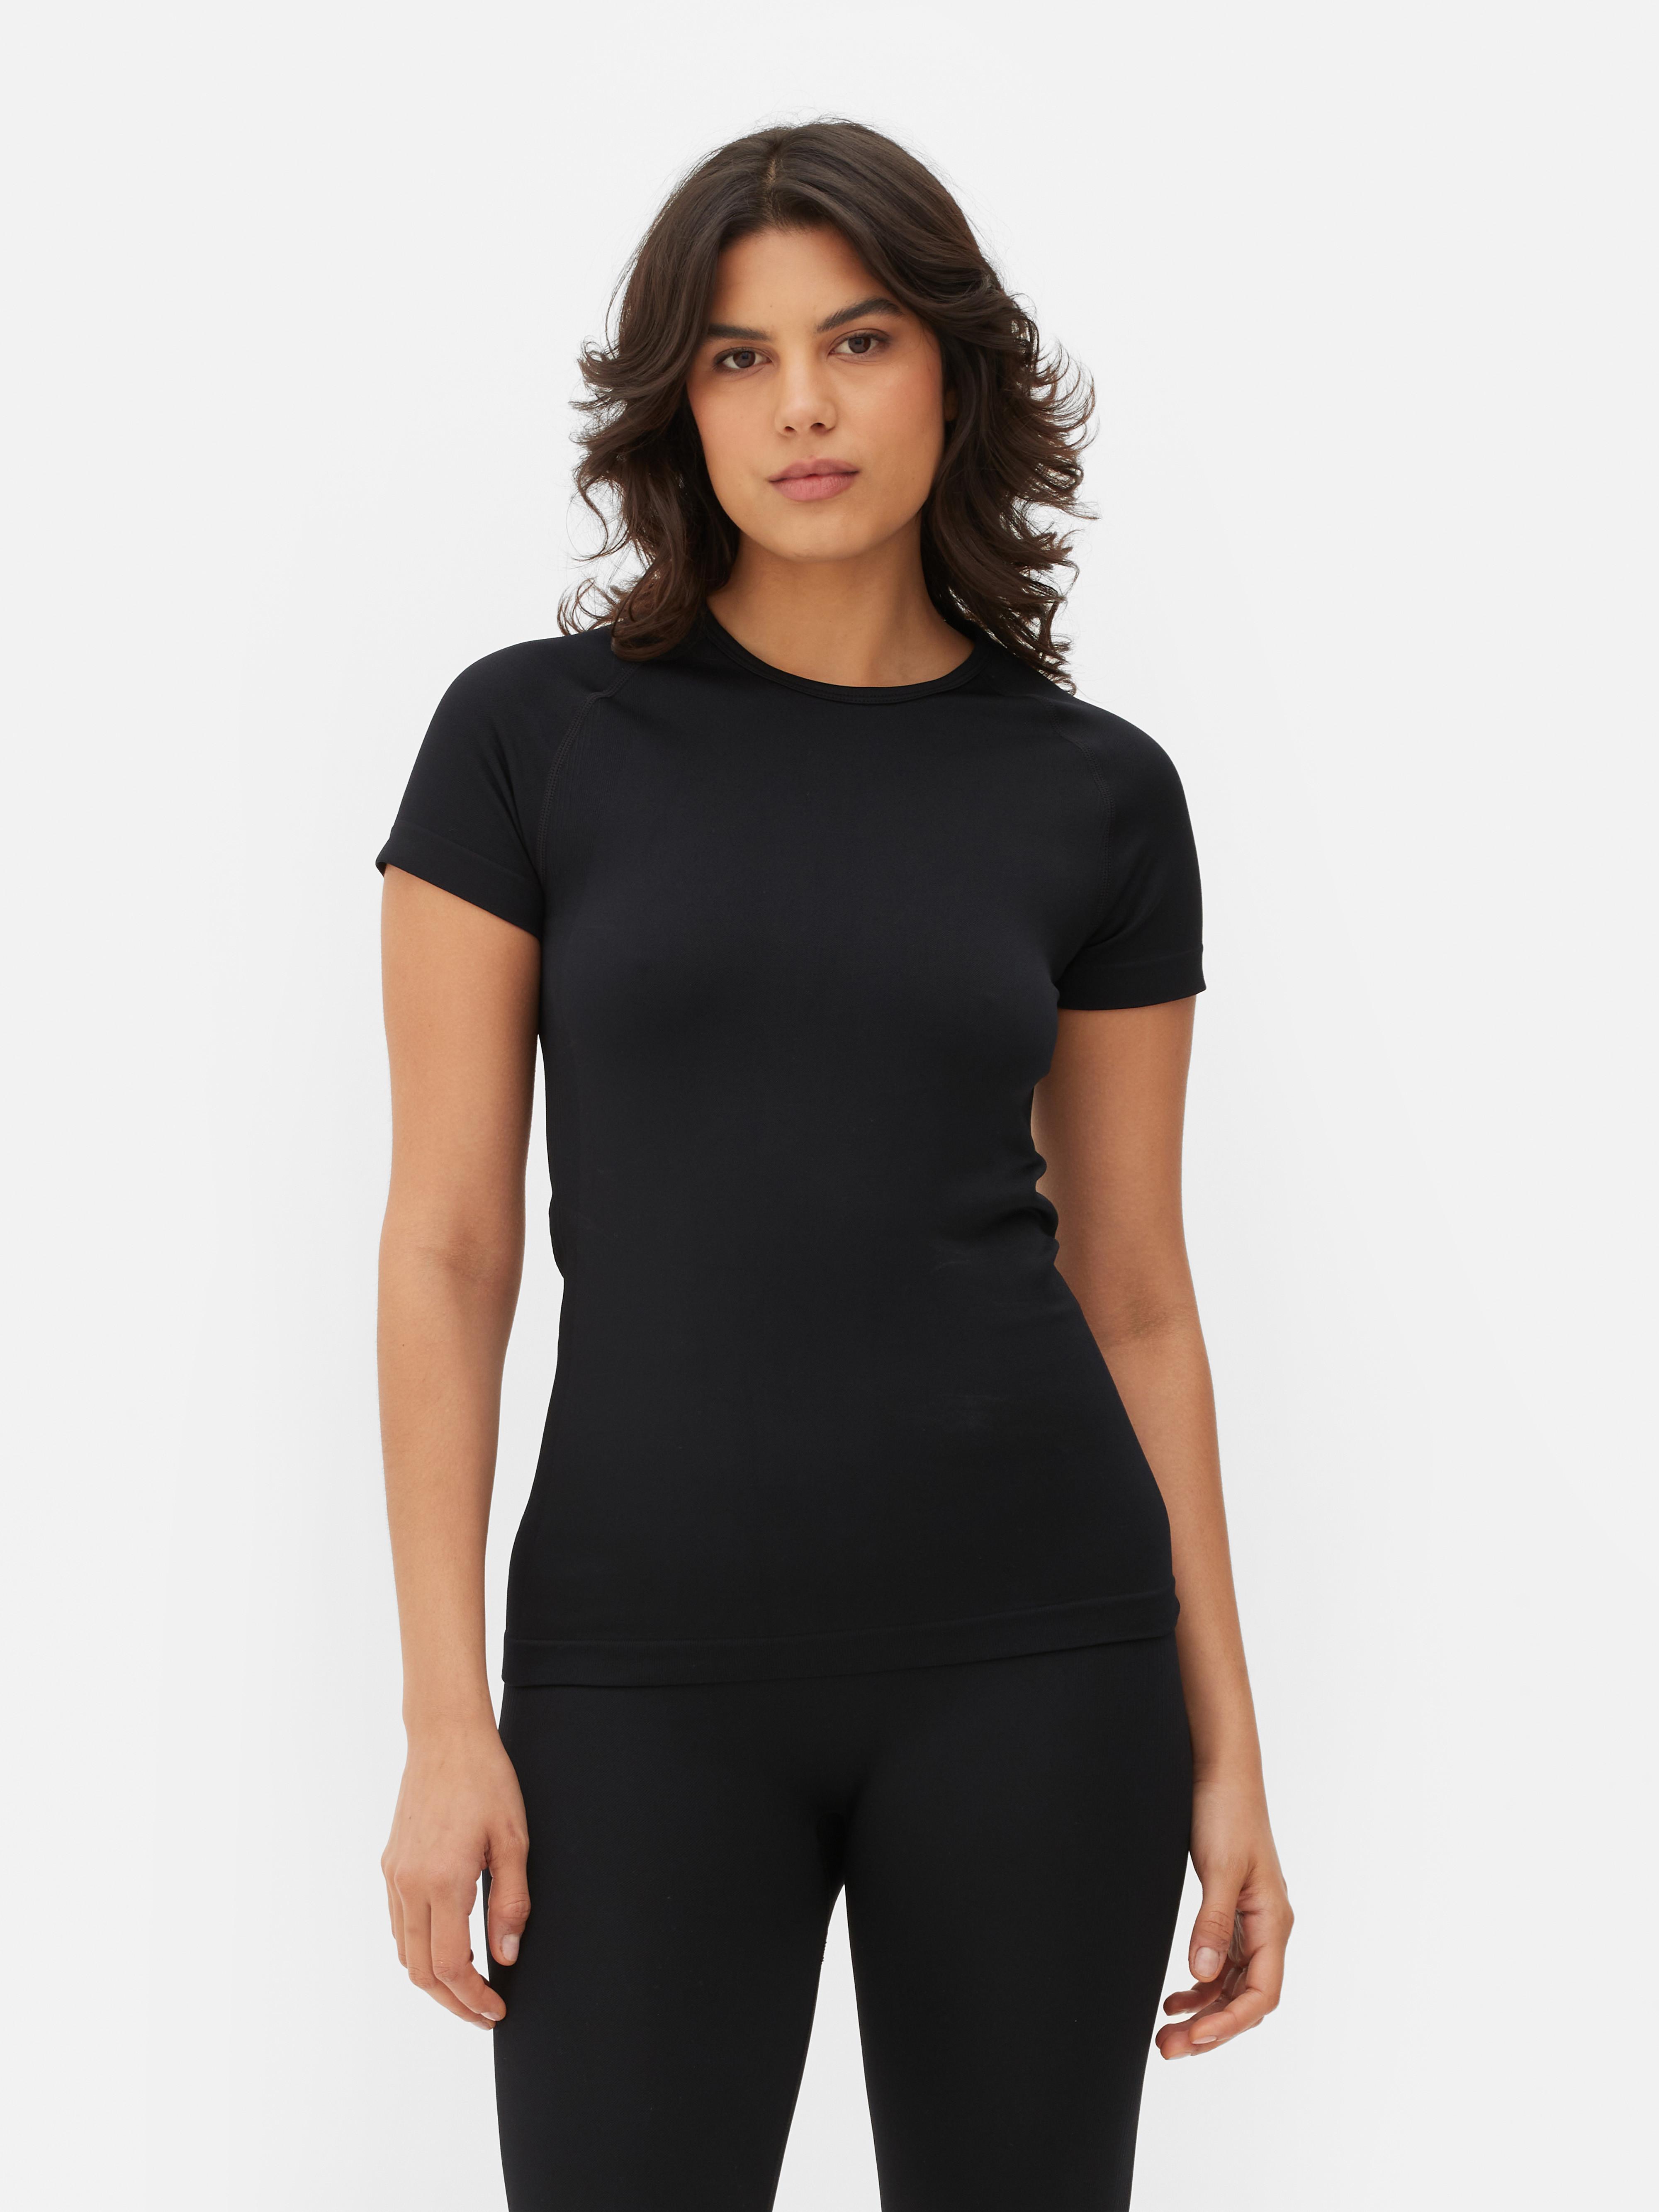 Women's Black Active Performance T-shirt | Primark